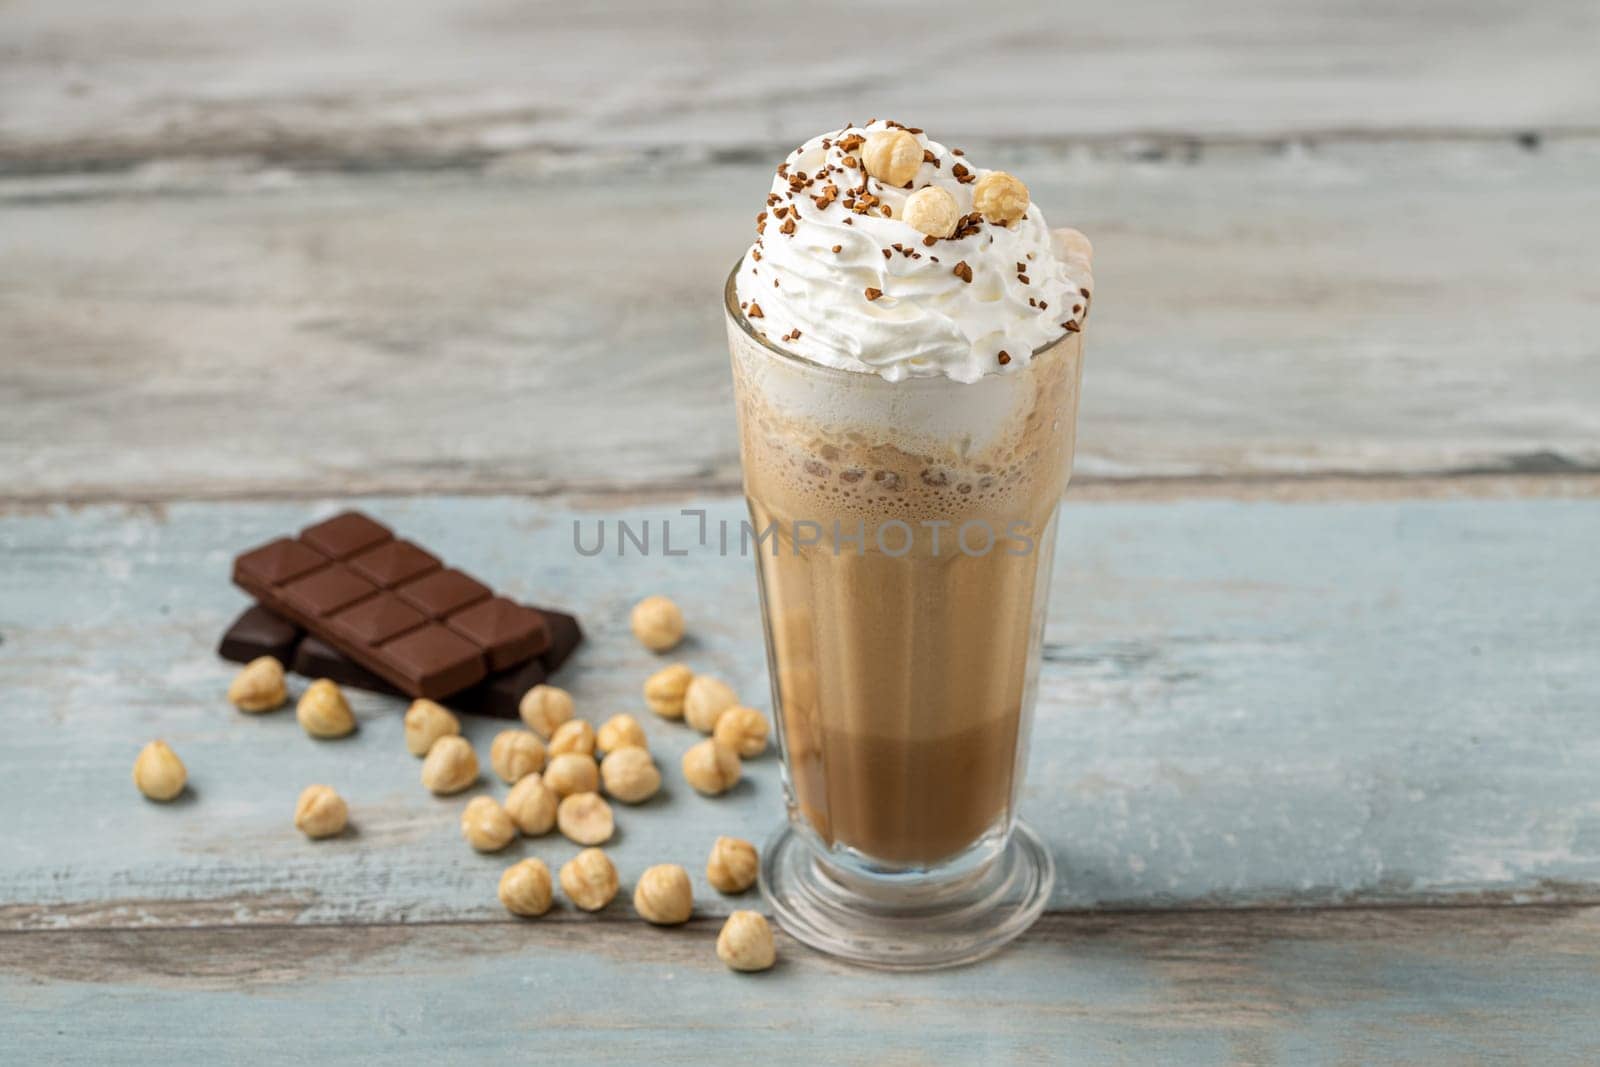 hazelnut and chocolate milkshake with coffee sprinkled on top by Sonat